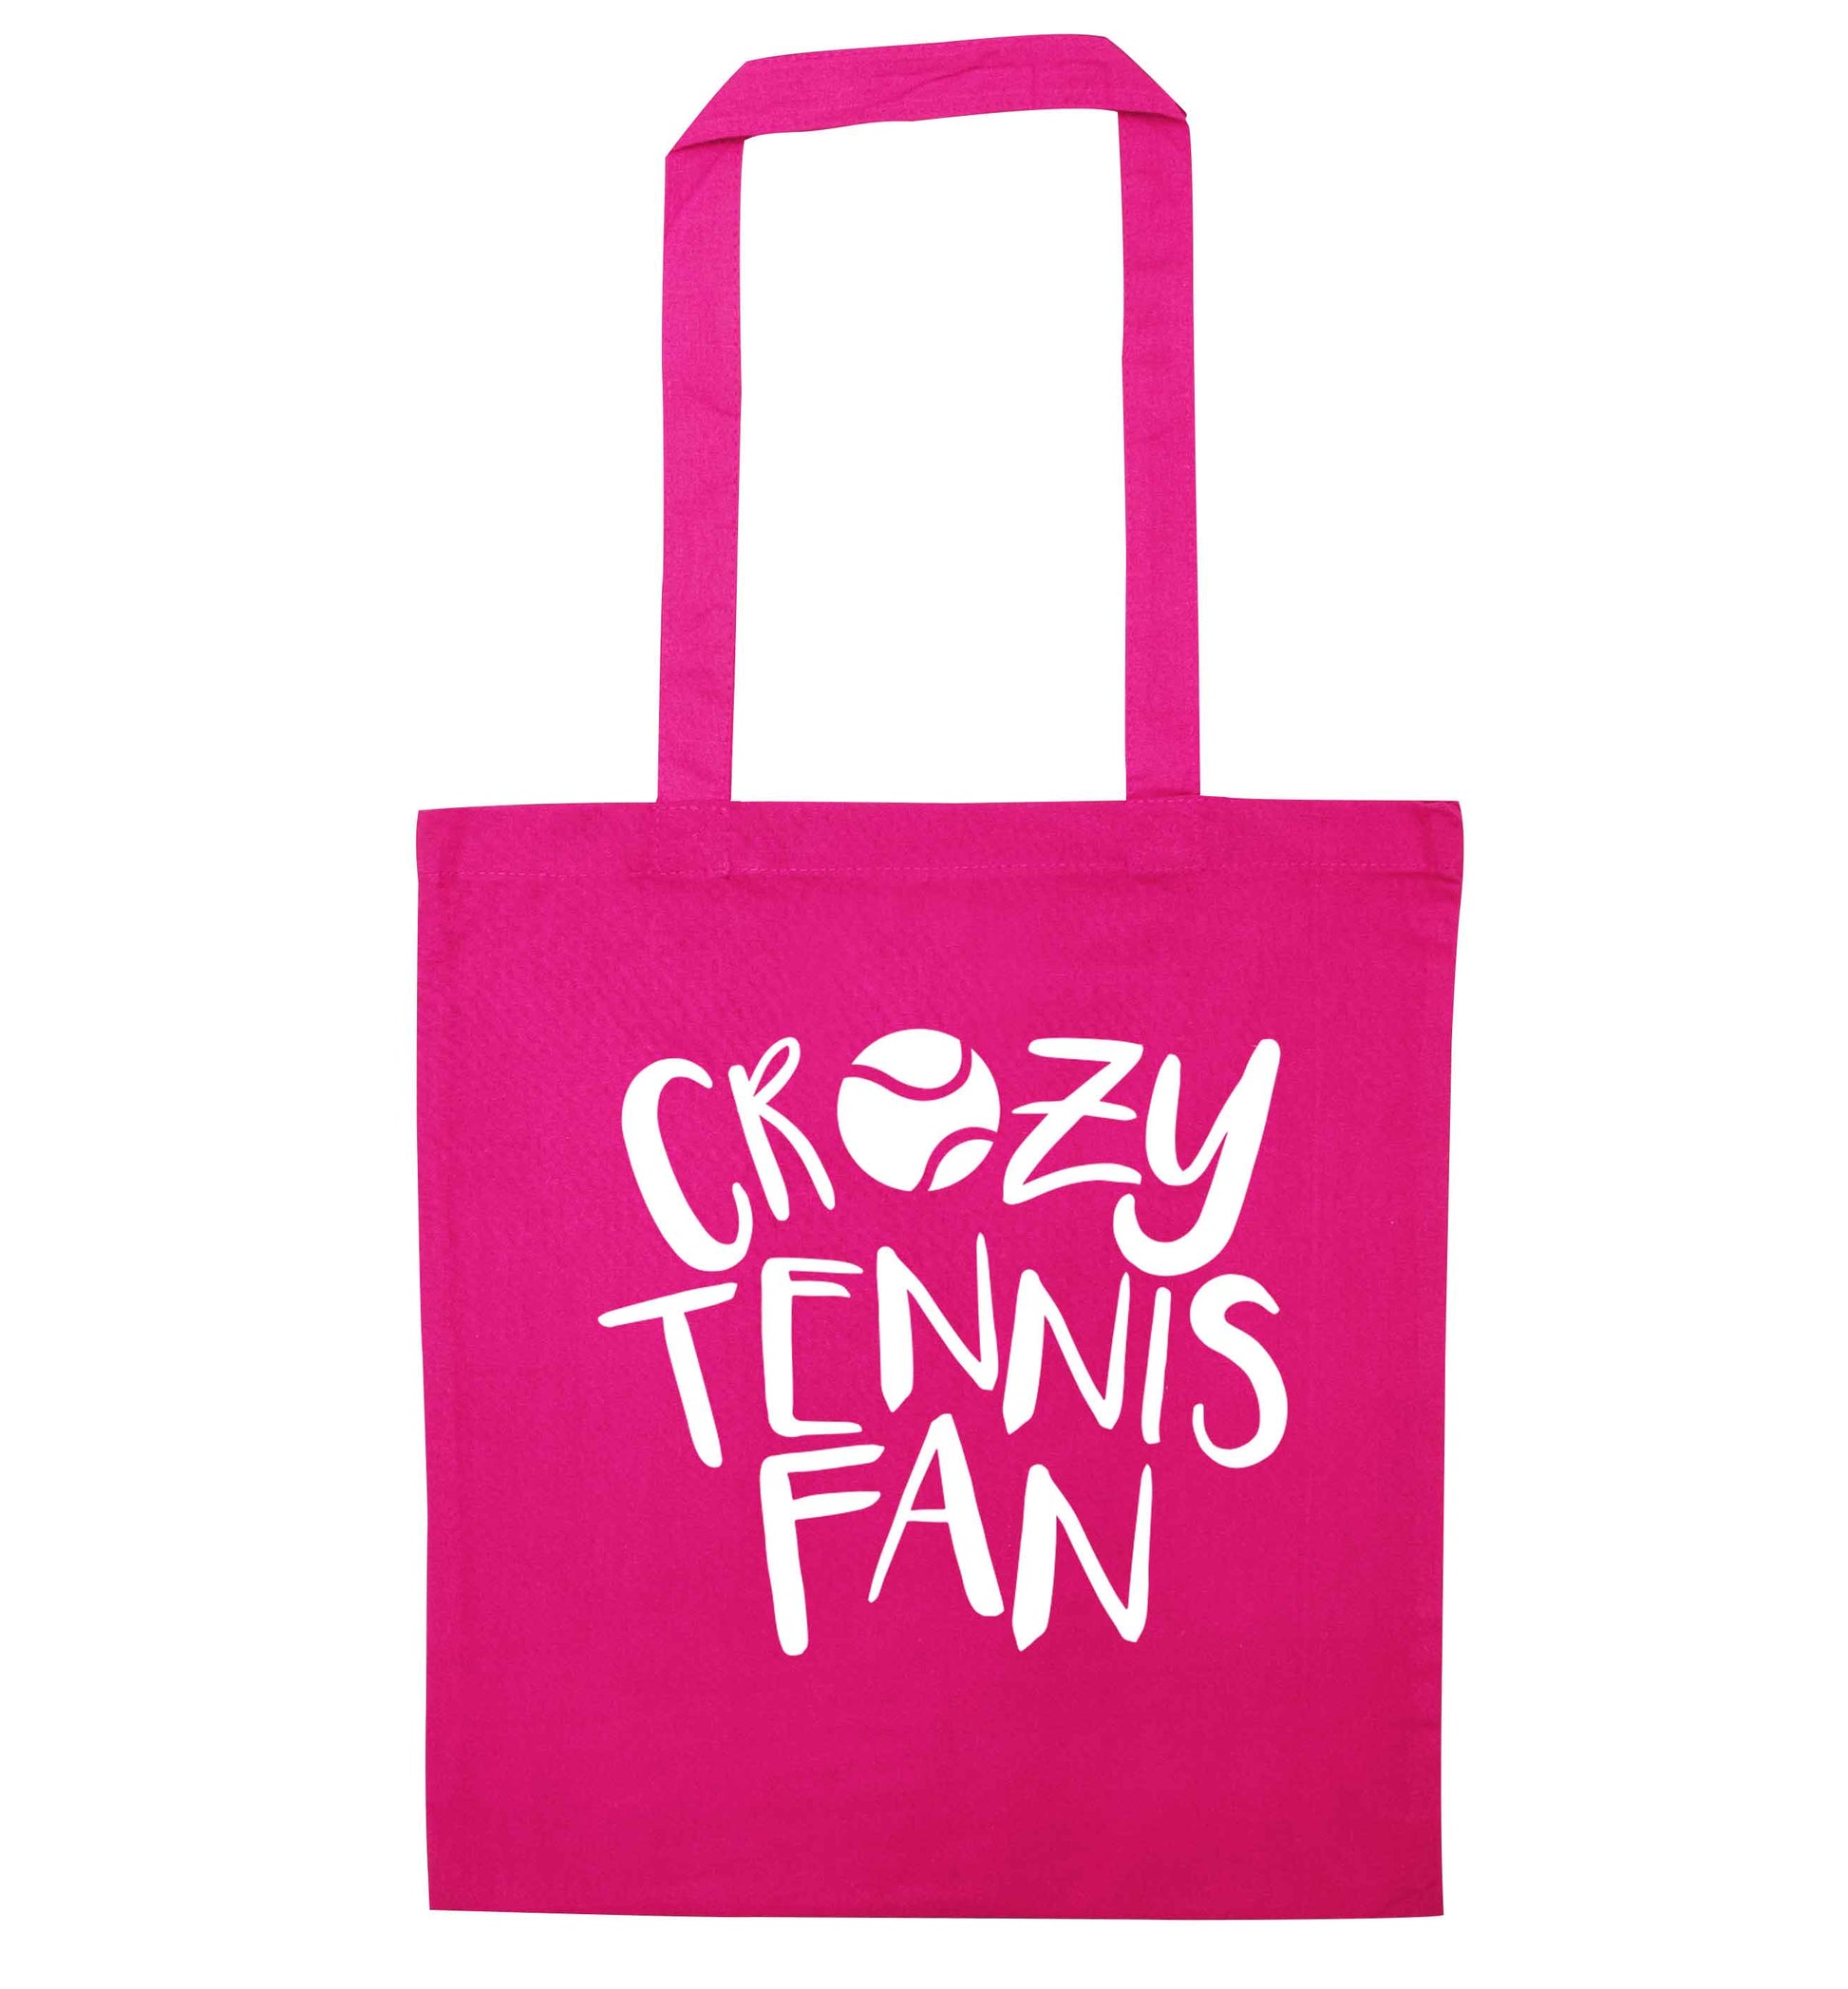 Crazy tennis fan pink tote bag